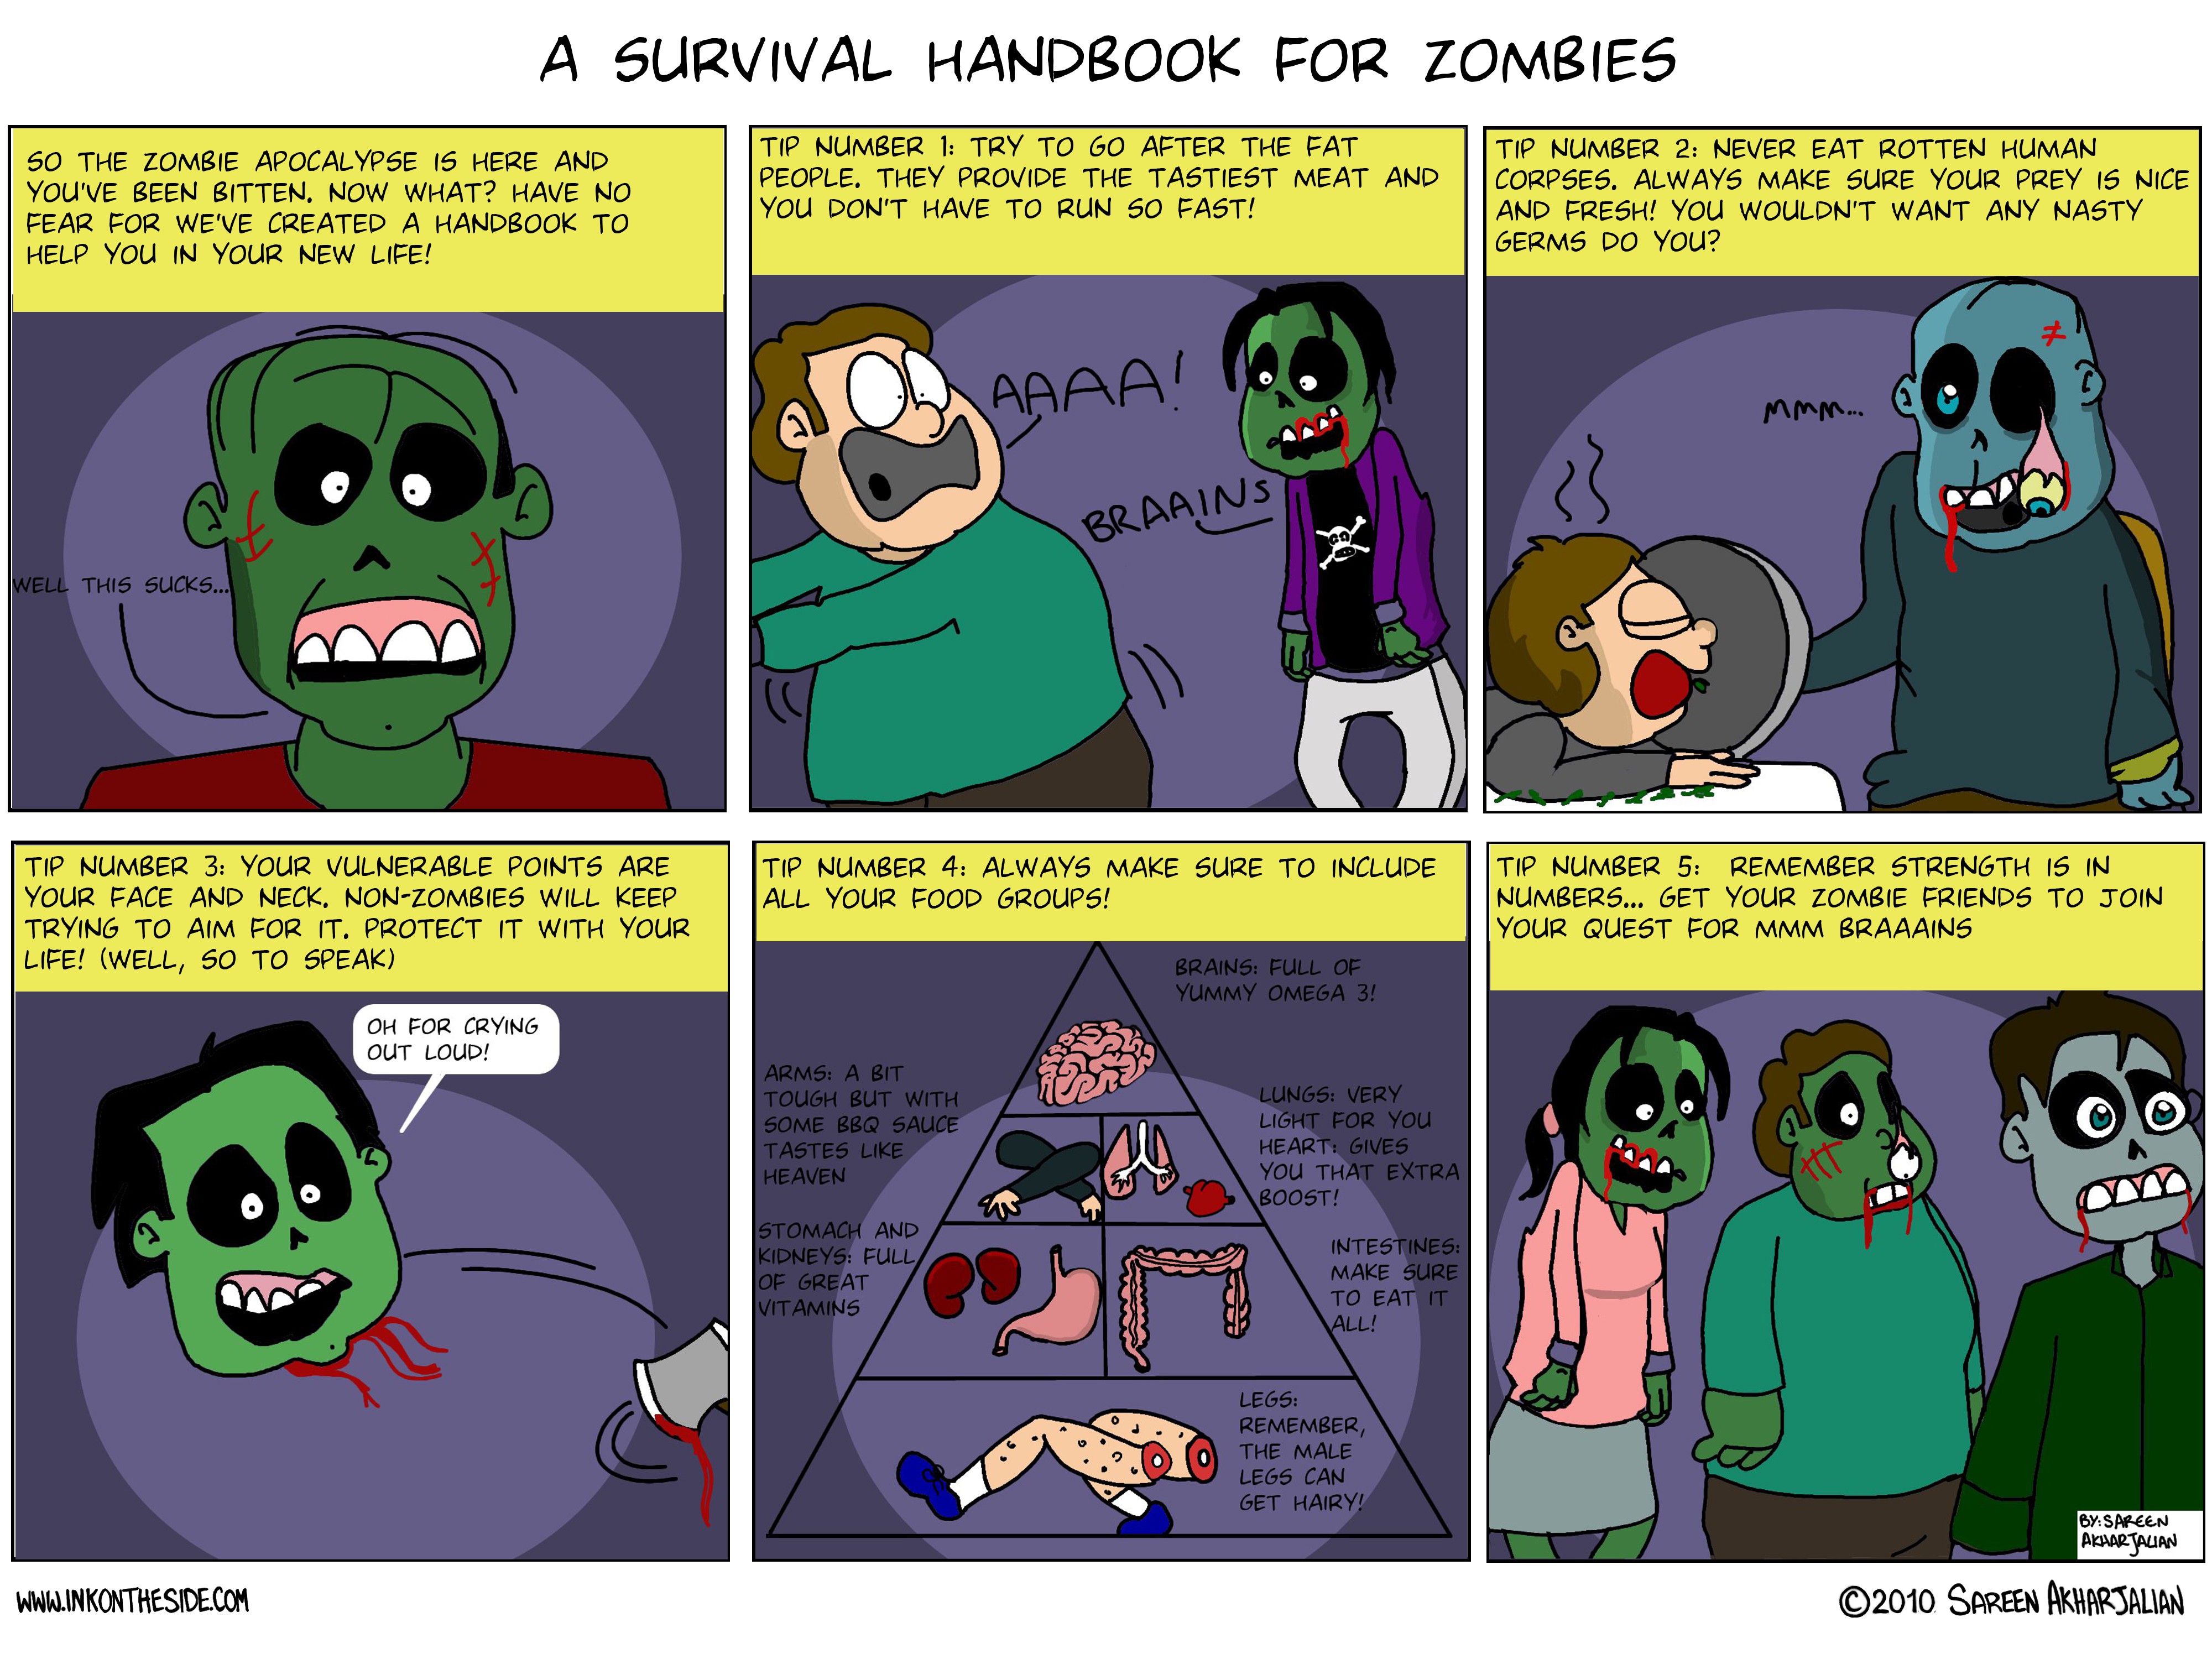 Zombie Handbook: 5 Tips On Surviving a Zombie Apocalypse